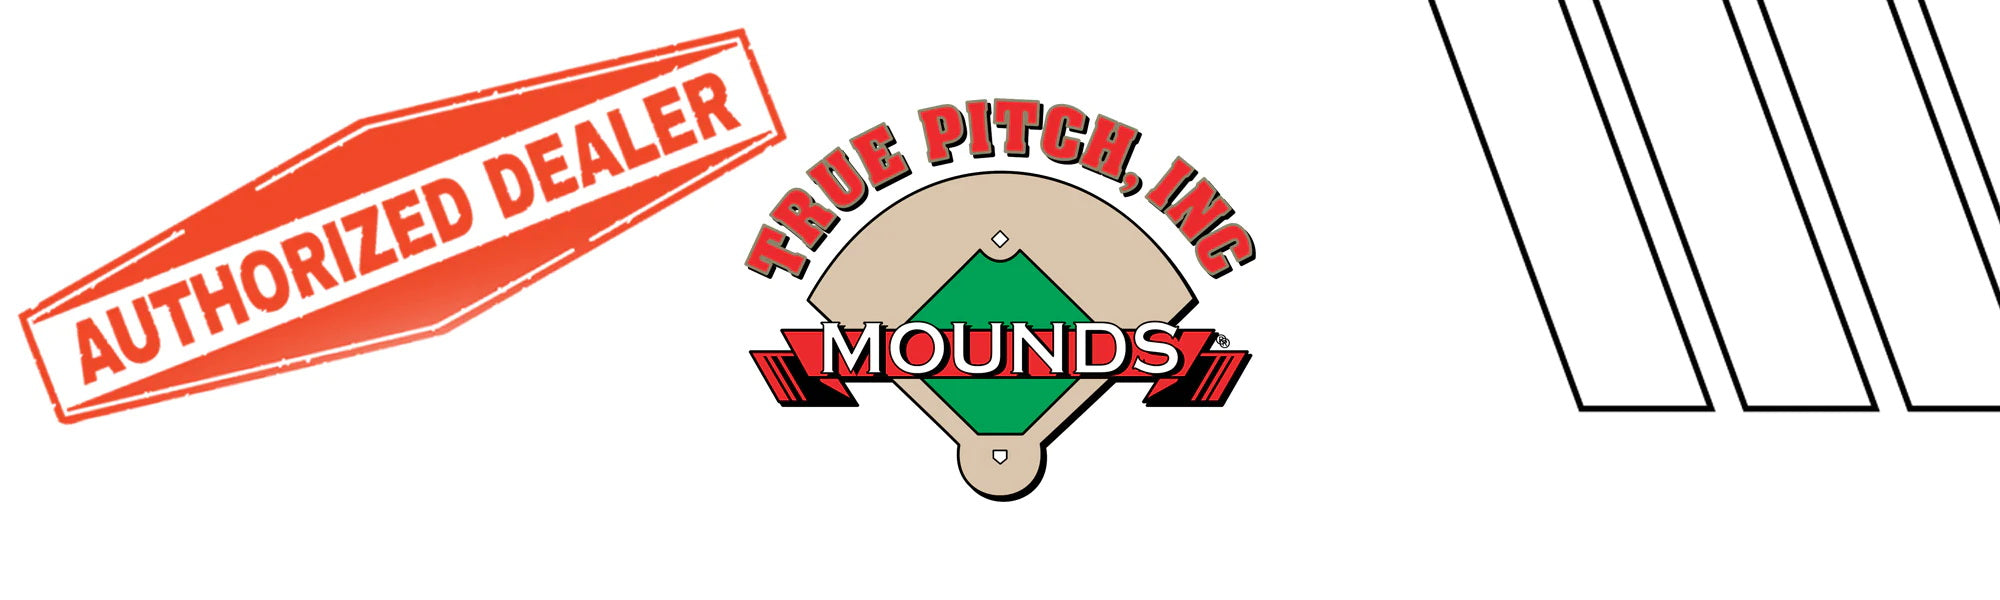 True Pitch Mounds